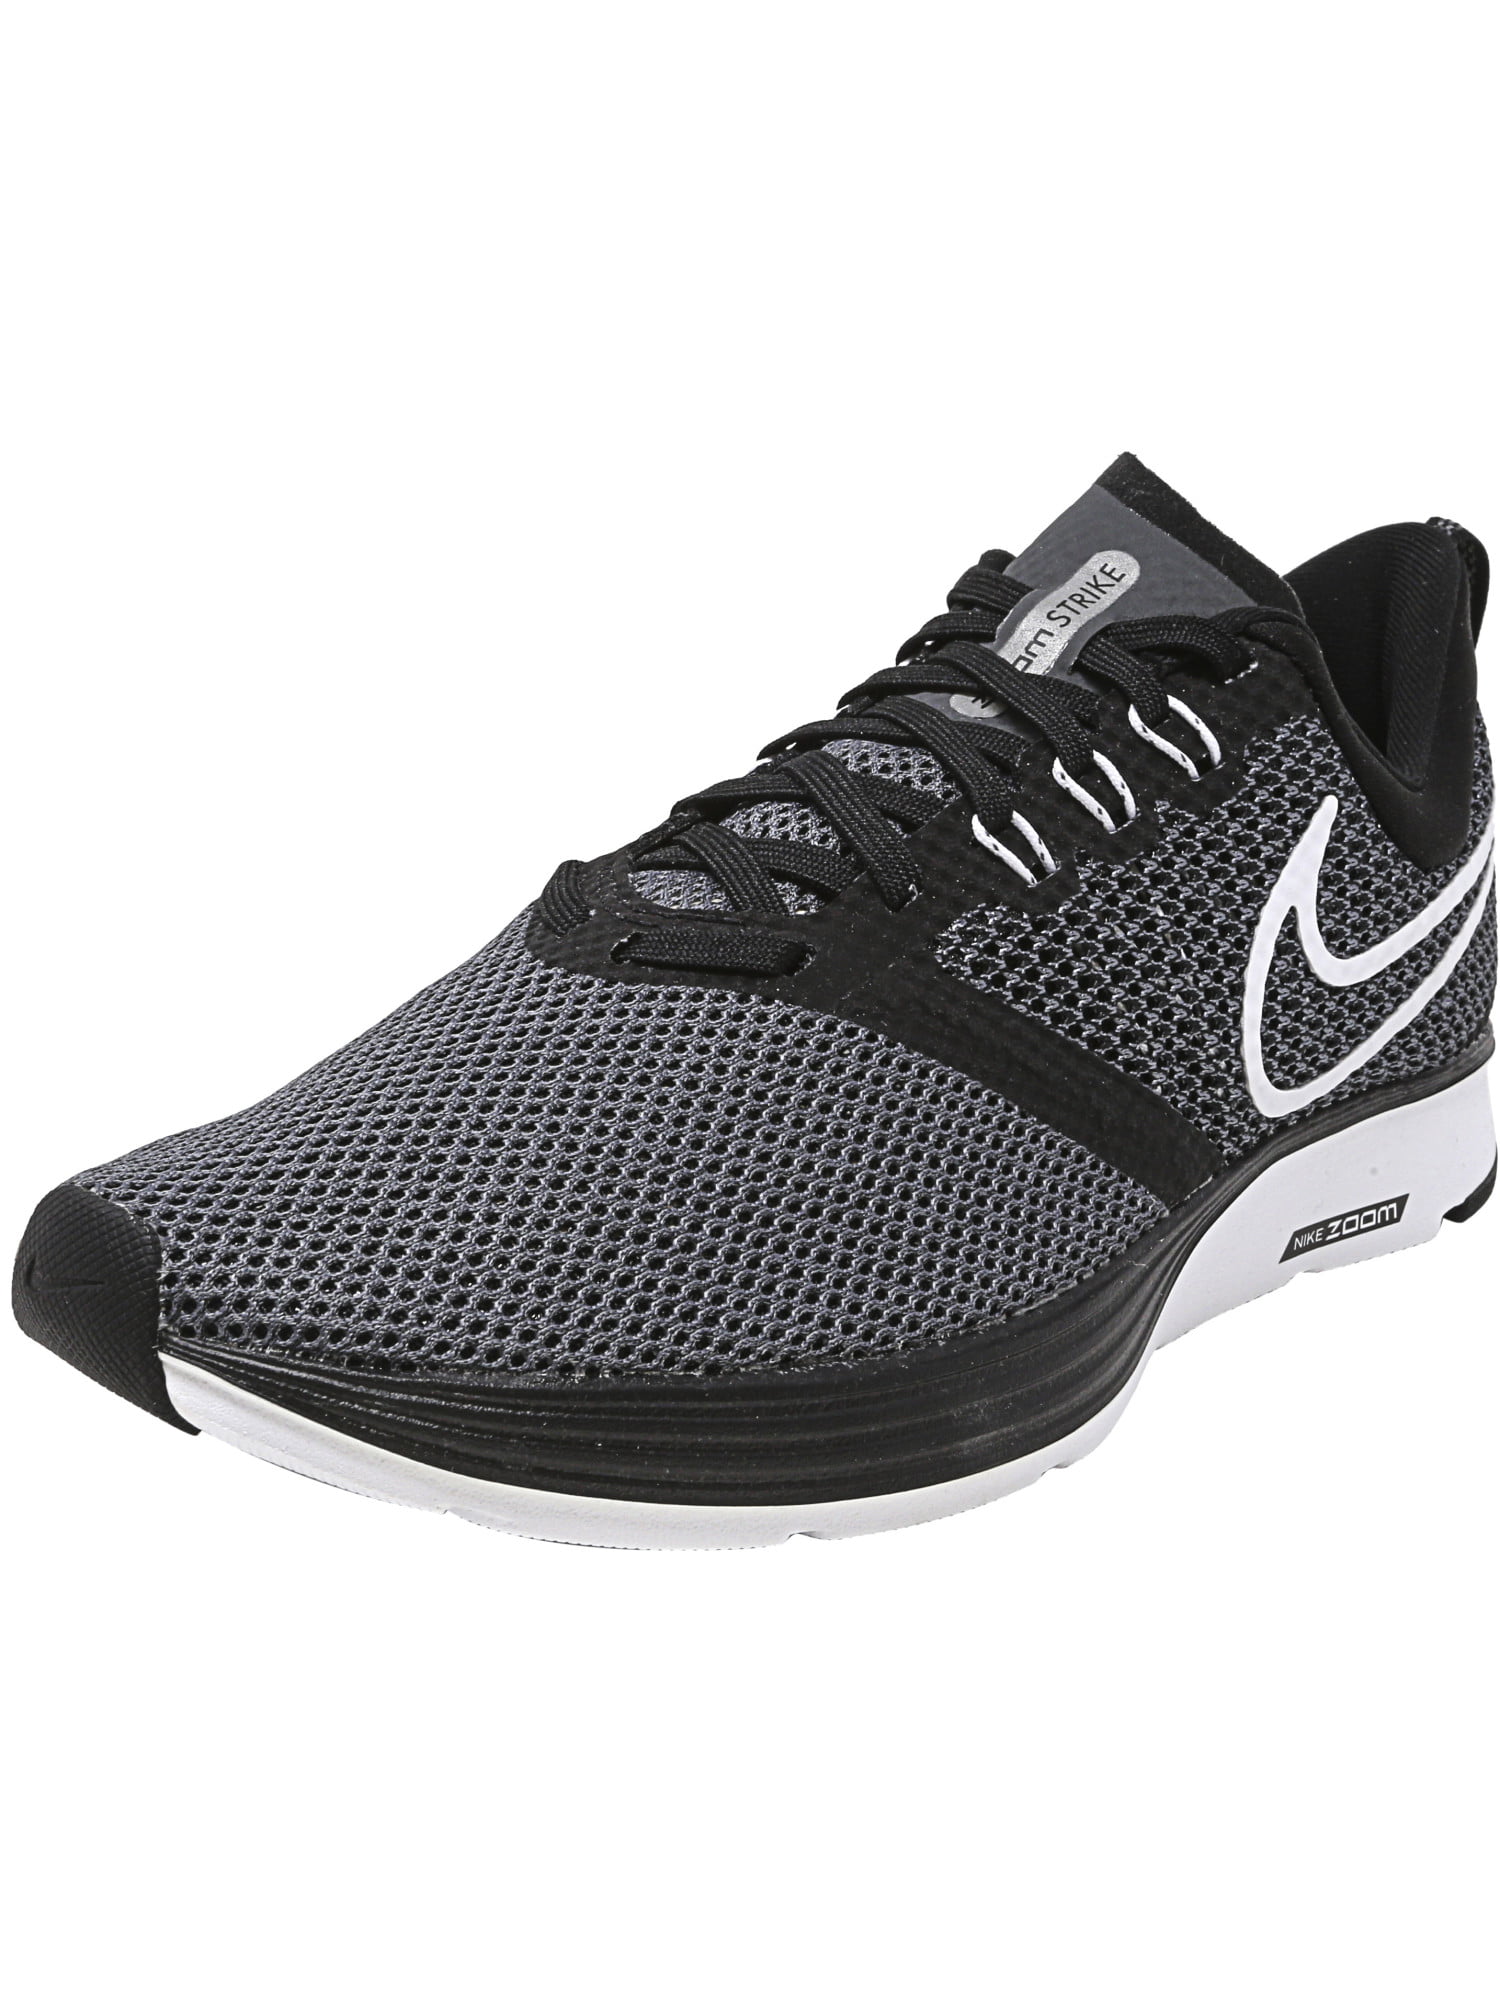 Nike Zoom Strike Black Grey Ankle-High Running Shoe - 8.5M - Walmart.com